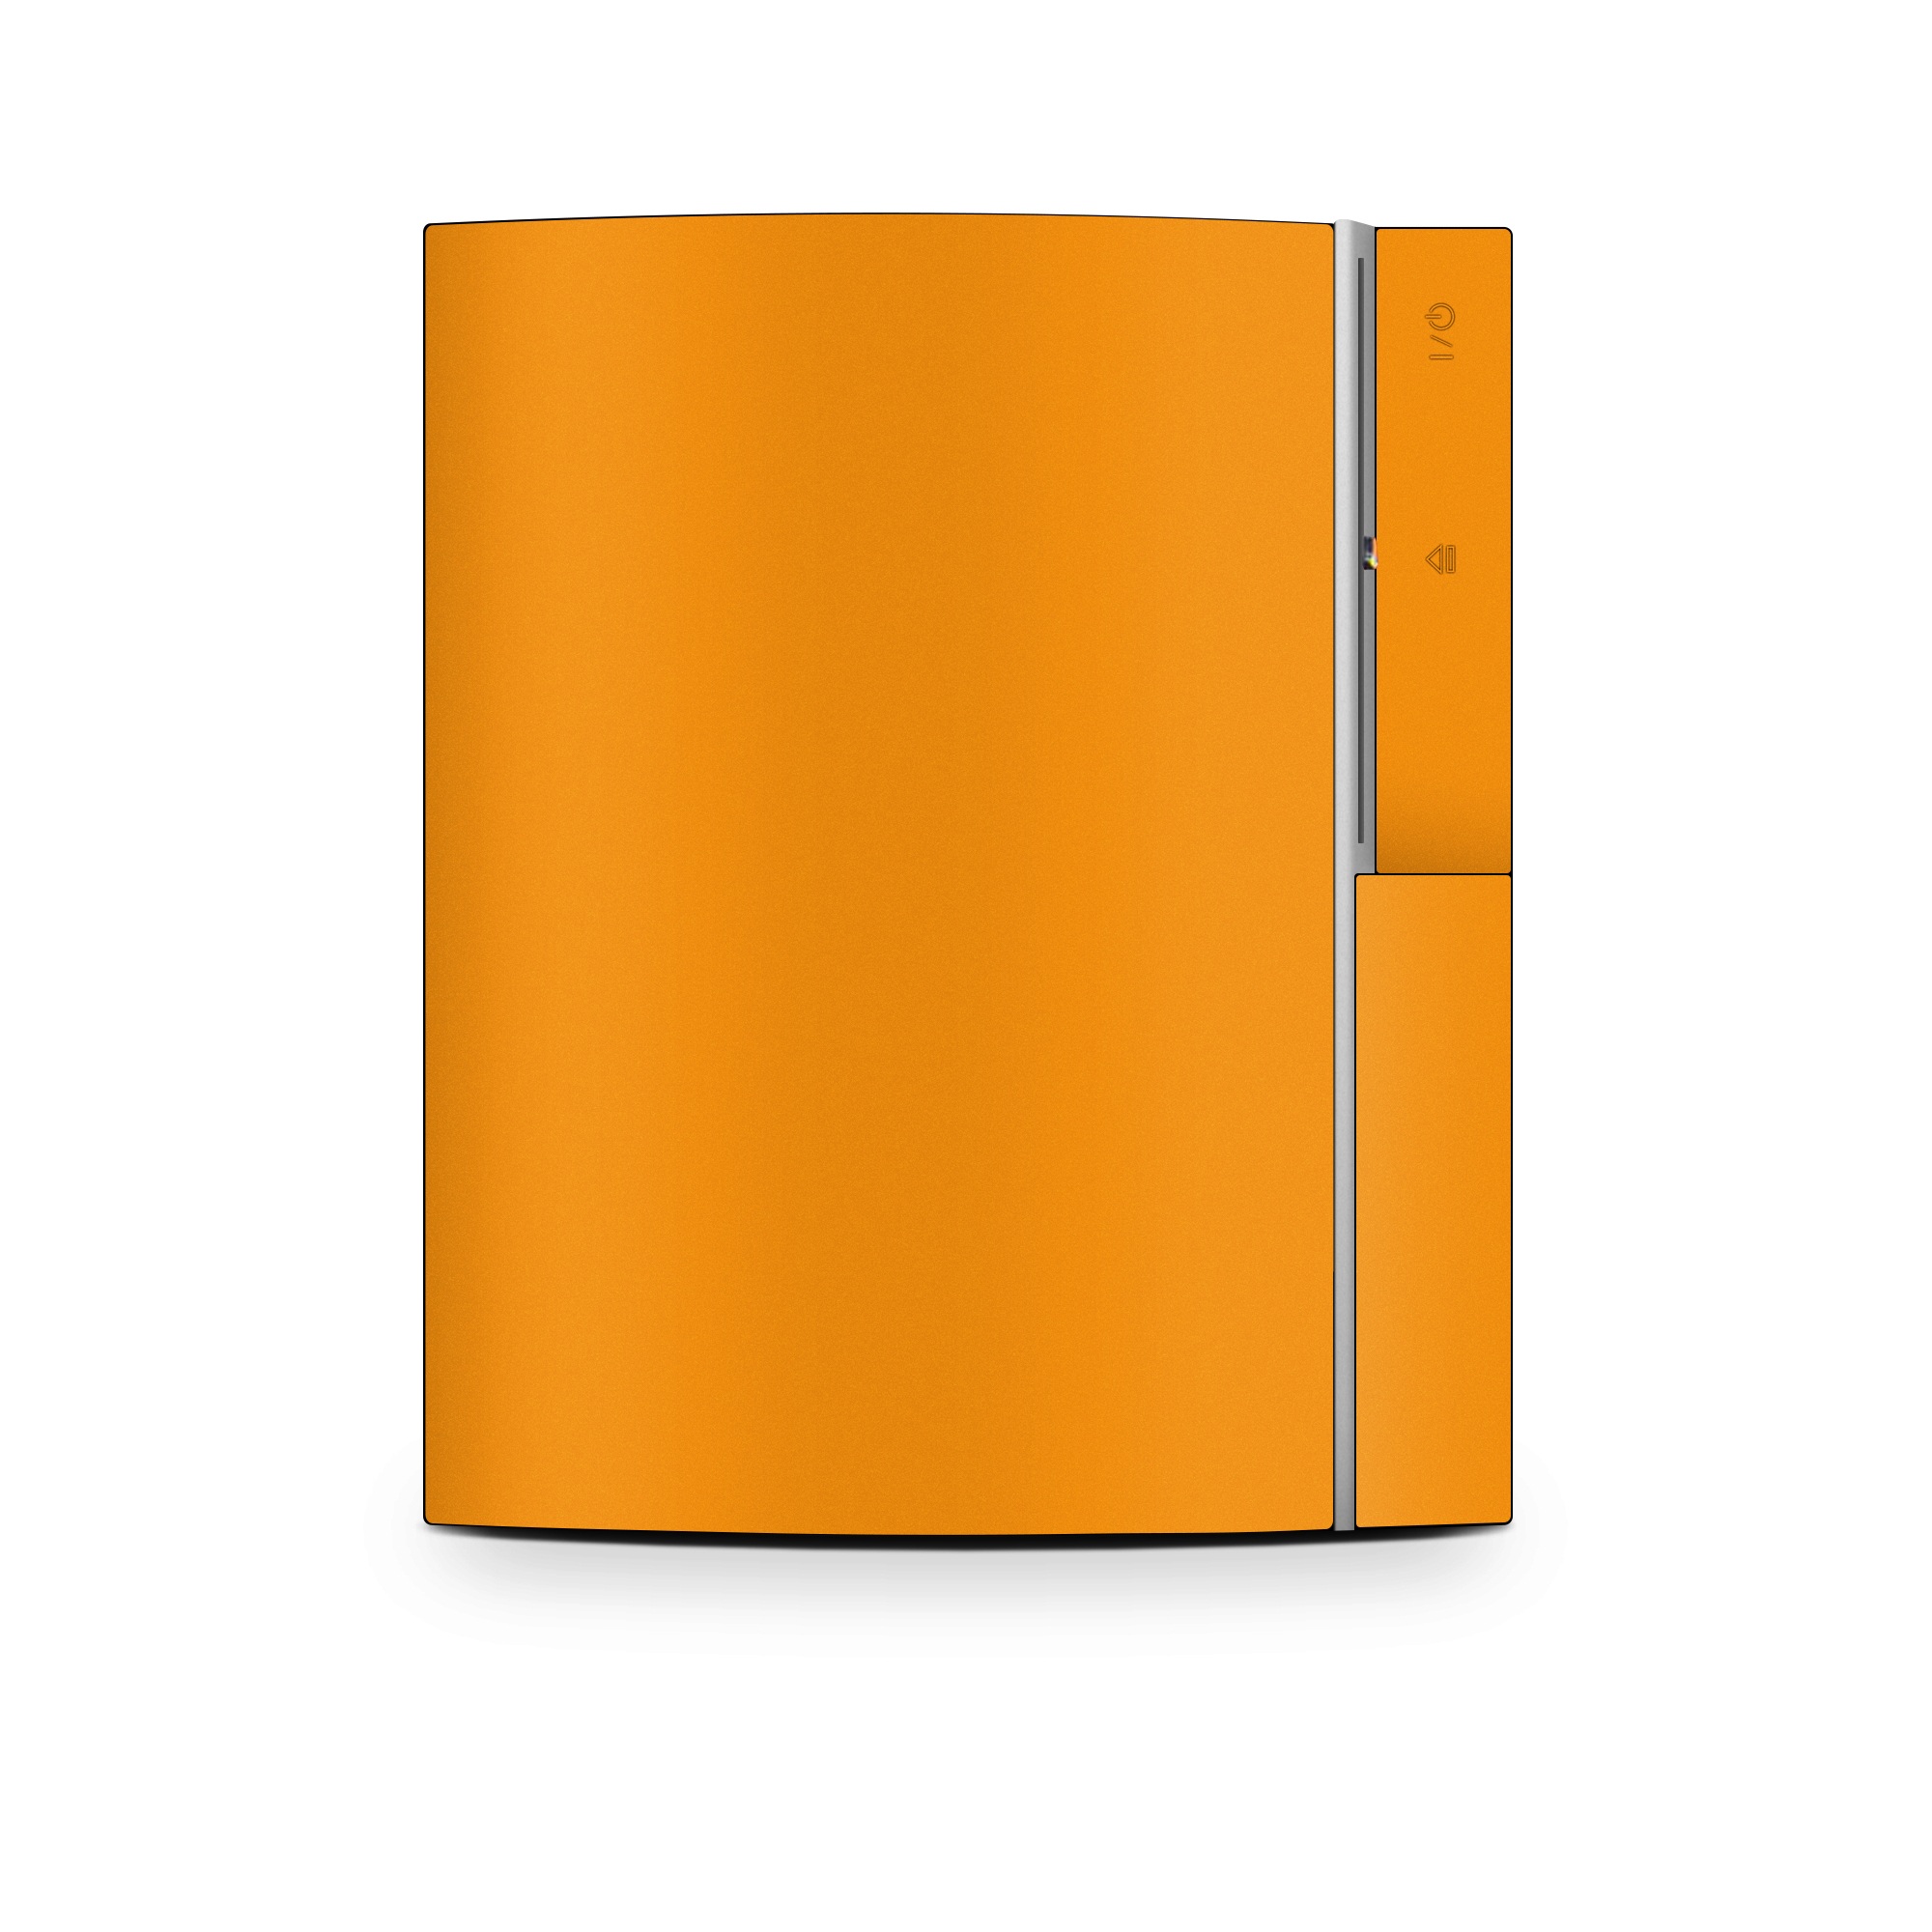 PS3 Skin - Solid State Orange (Image 1)